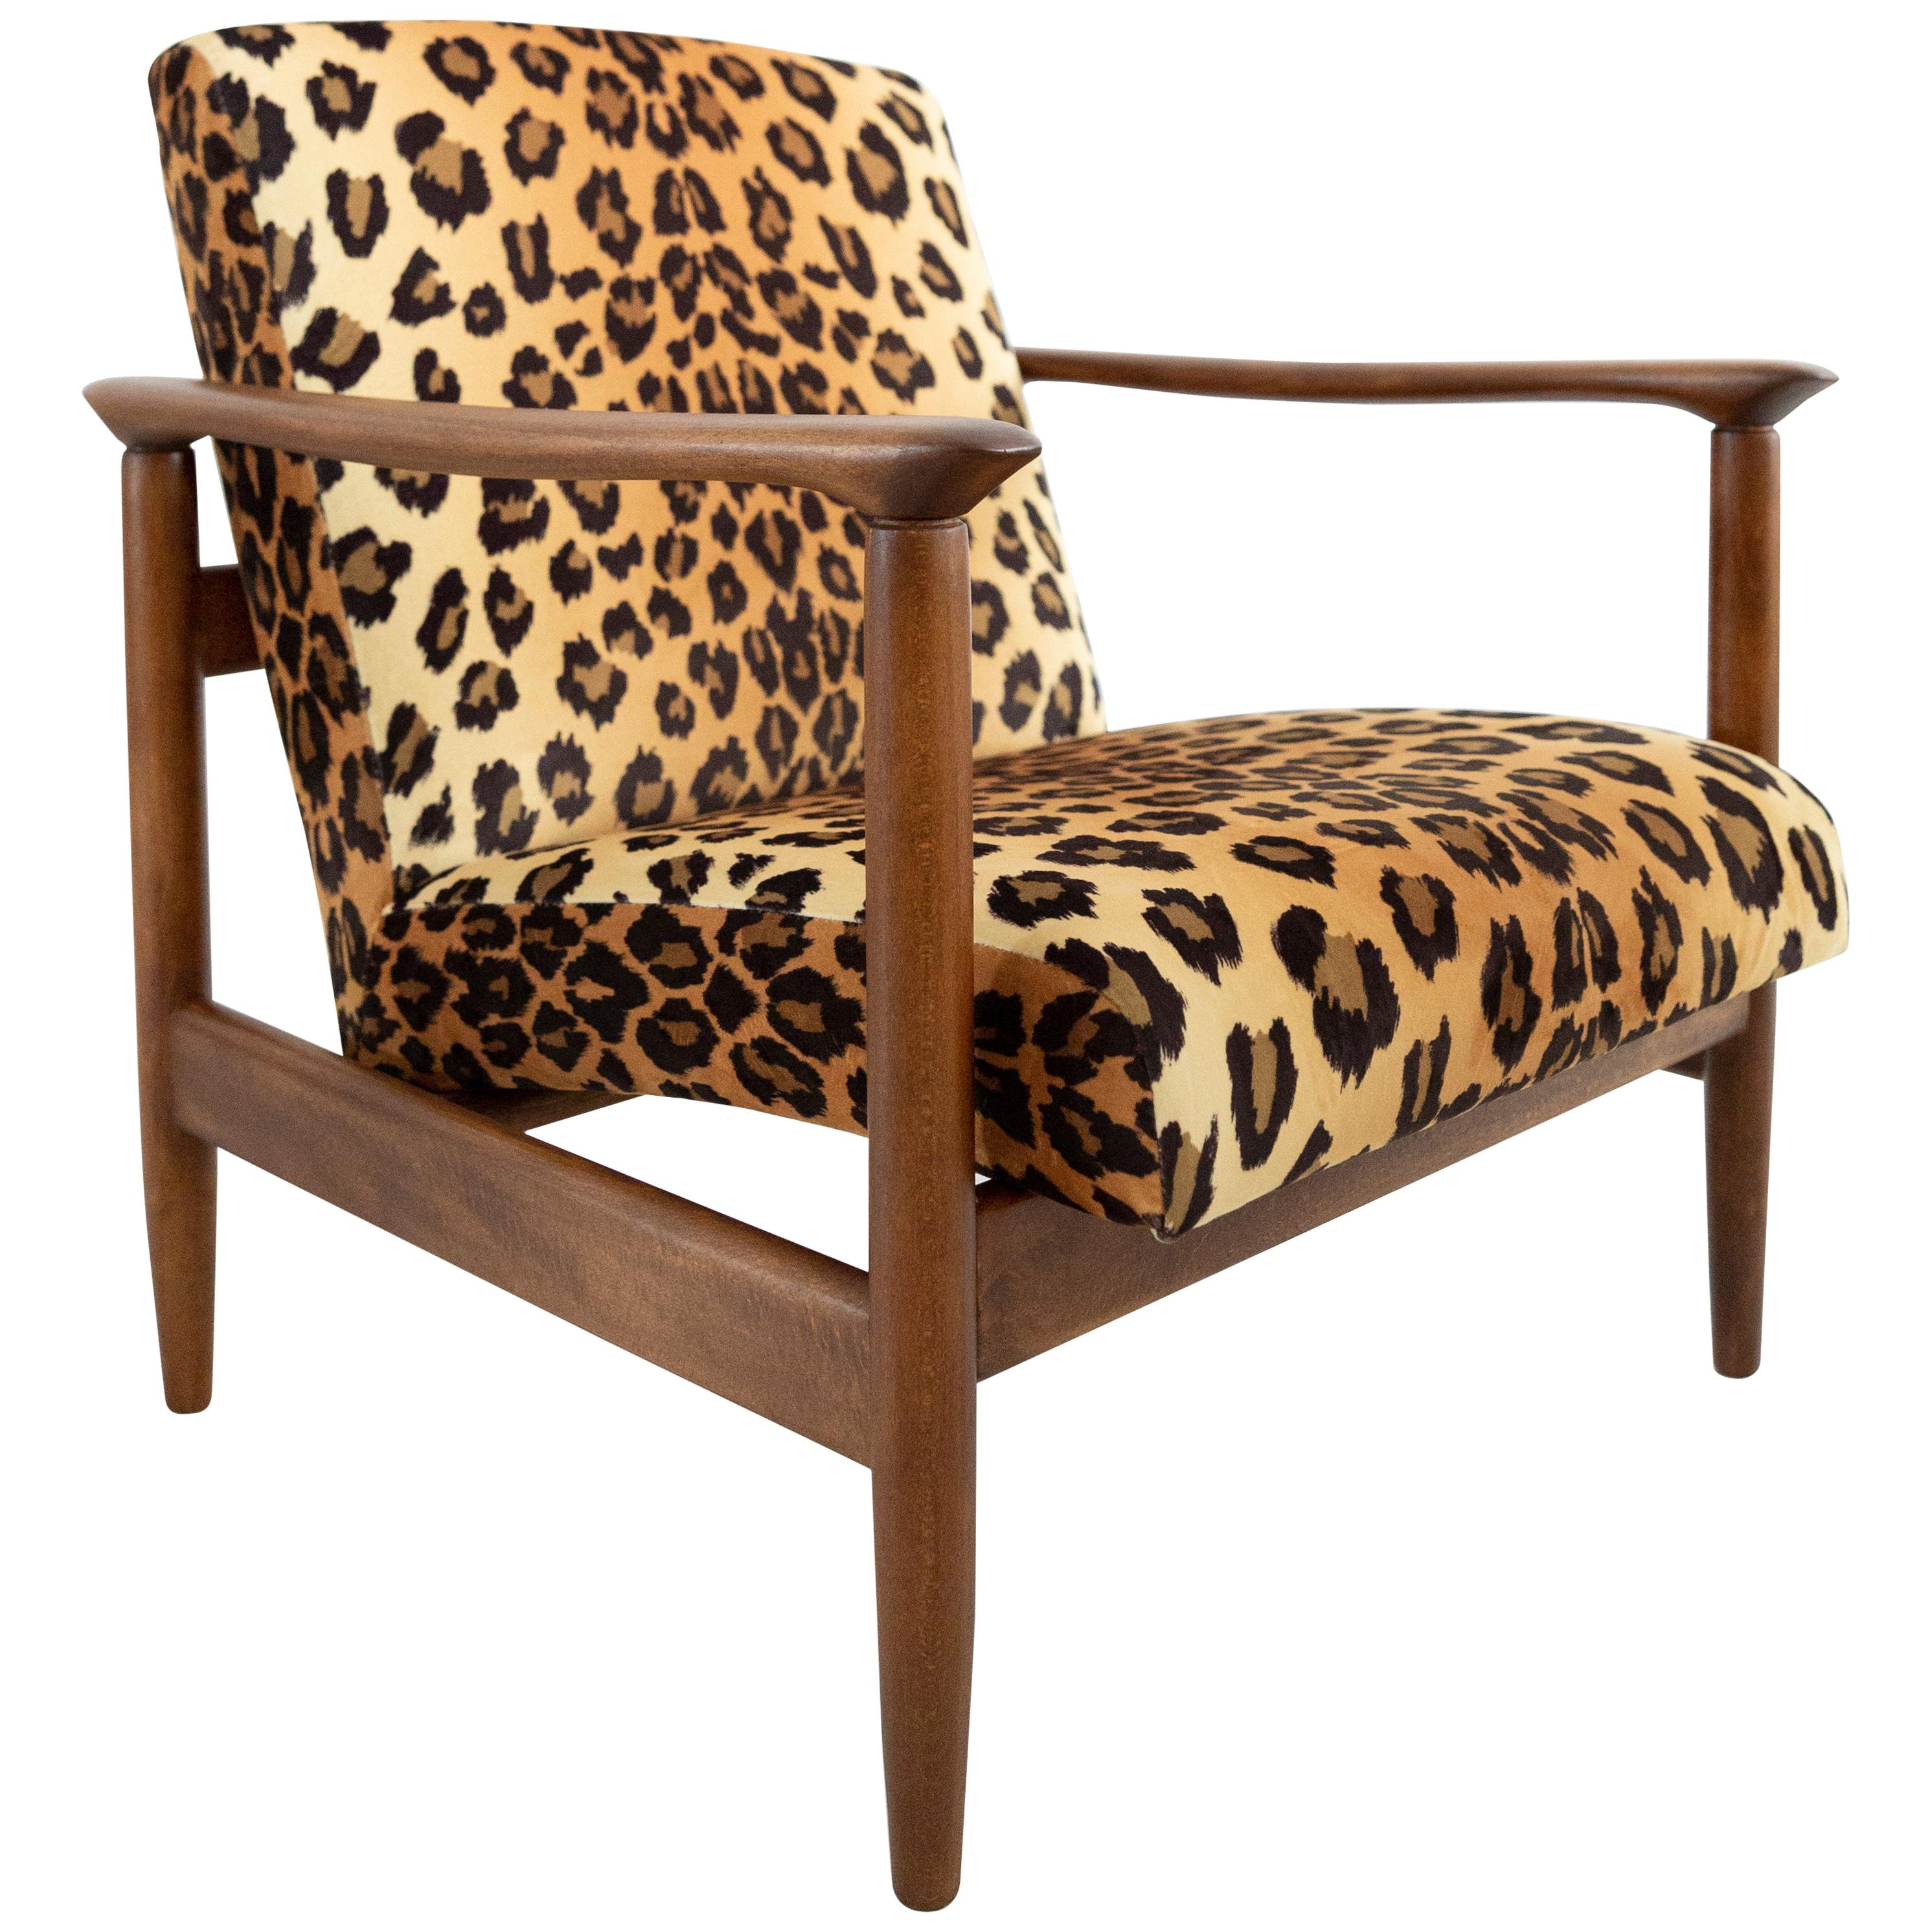 Sessel aus Samt mit Leopardenmuster, helles Holz, Edmund Homa, GFM-142, 1960er Jahre, Polen